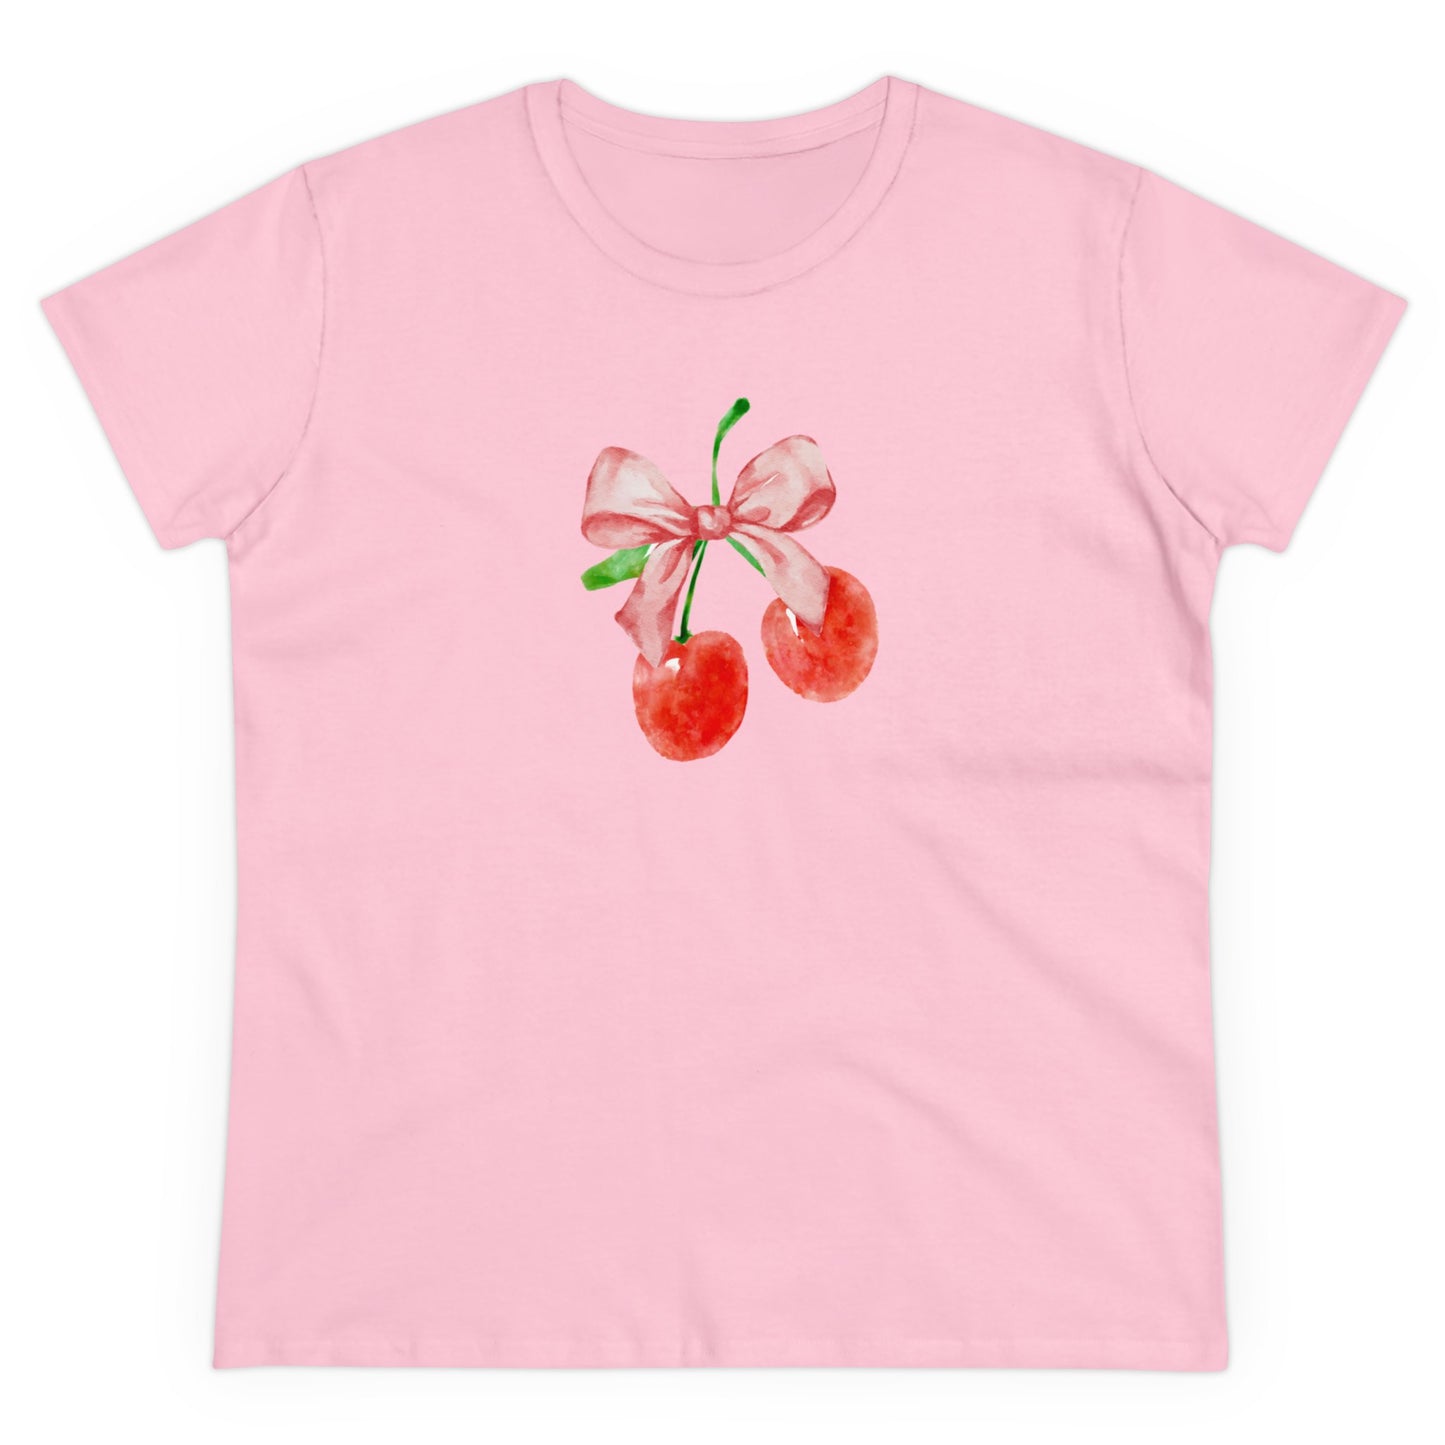 Coquette Tshirt, Cherry and Bow Sweatshirt, Grandmillenial Shirt, Pink Bow Sweatshirt, Sleeve Design Sweatshirt, Girly Coquette Clothing